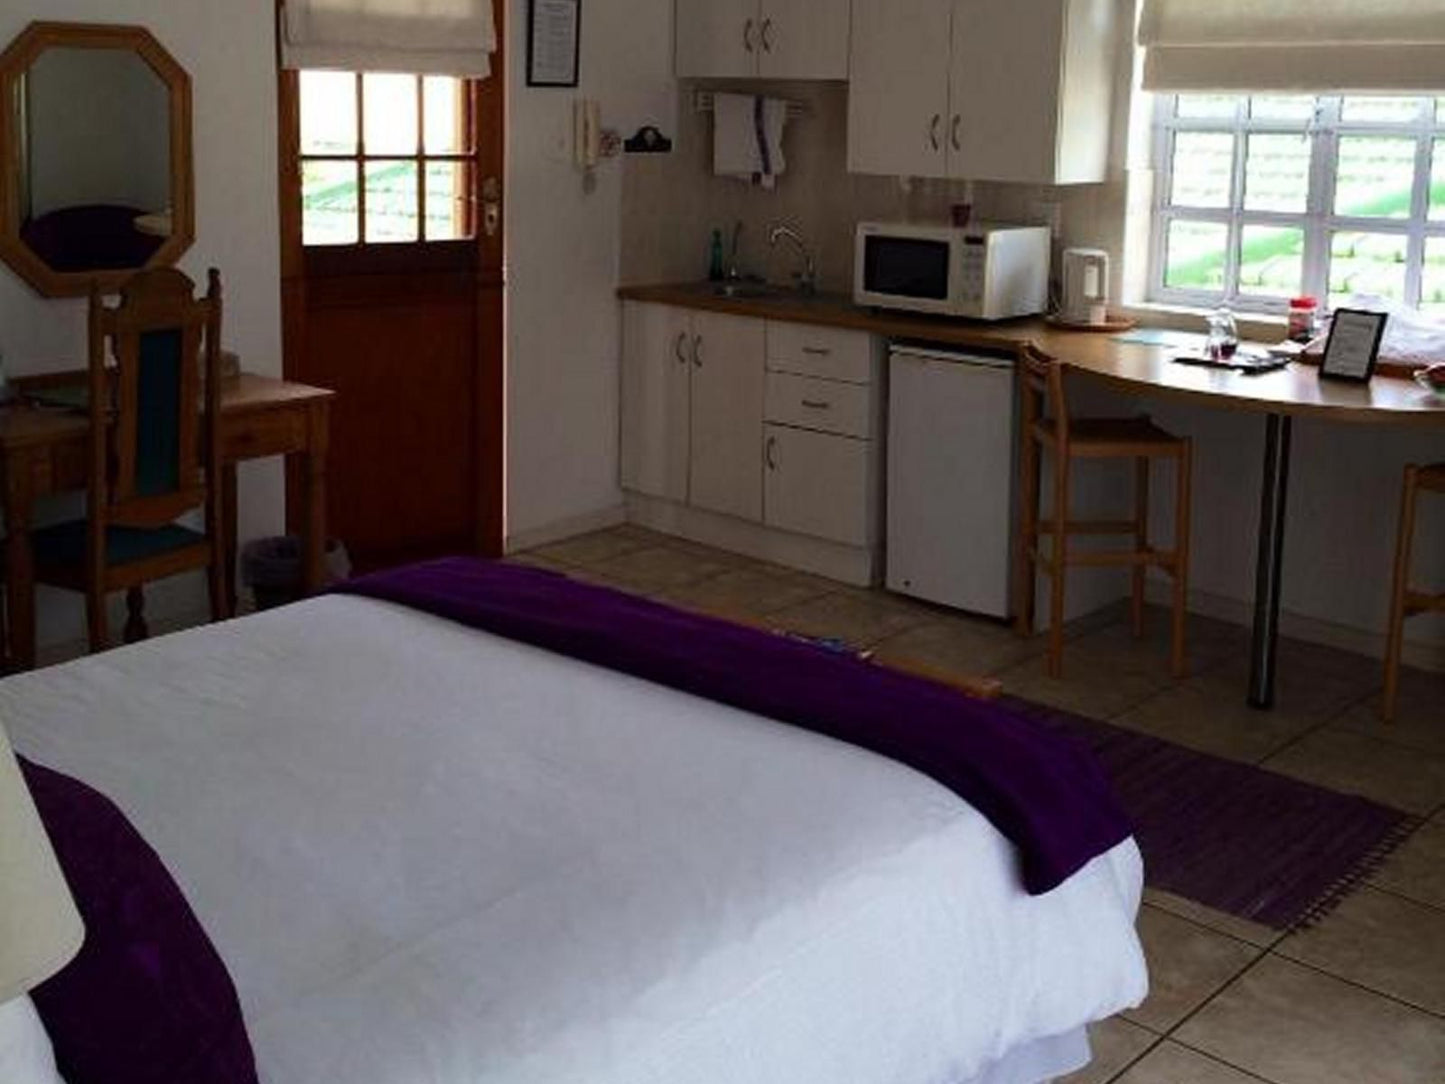 Anchorage Guest House Summerstrand Port Elizabeth Eastern Cape South Africa Bedroom